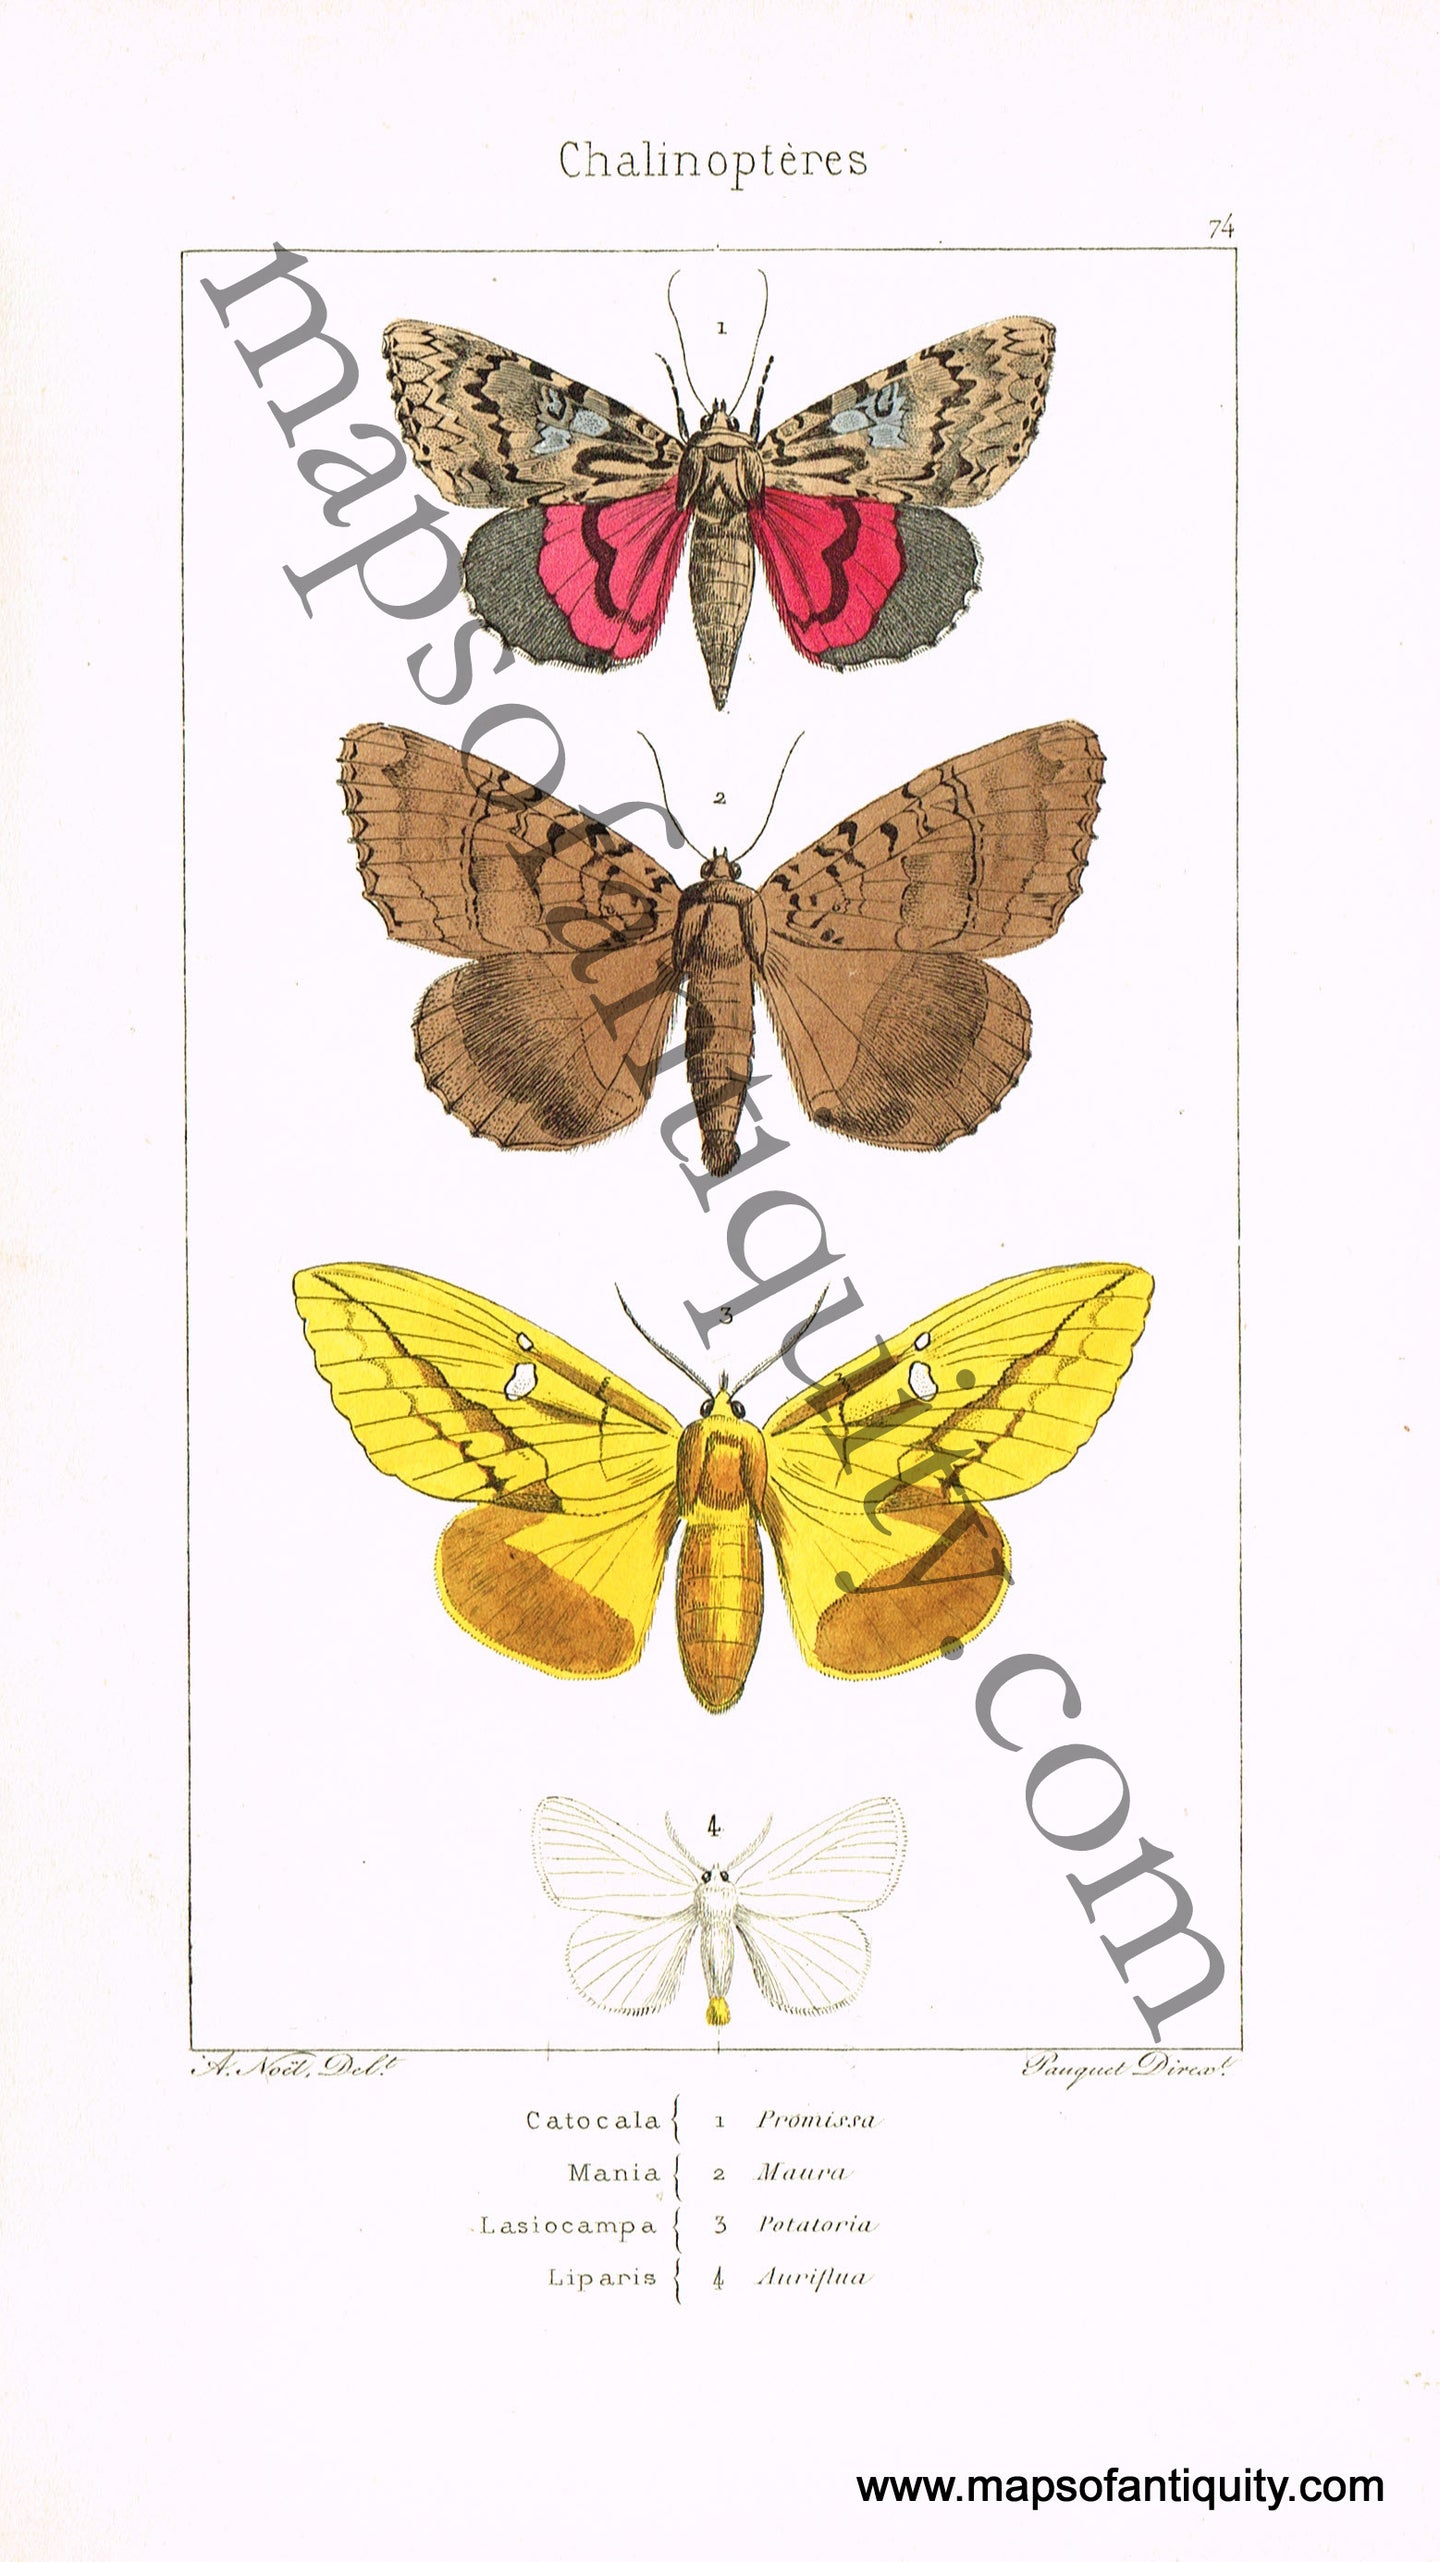 Antique-Hand-Colored-Print-Catocala-promissa-Mania-maura-Lasiocampa-potatoria-&-Liparis-auriflua-Antique-Prints-Natural-History-Insects-1864-Lucas-Maps-Of-Antiquity